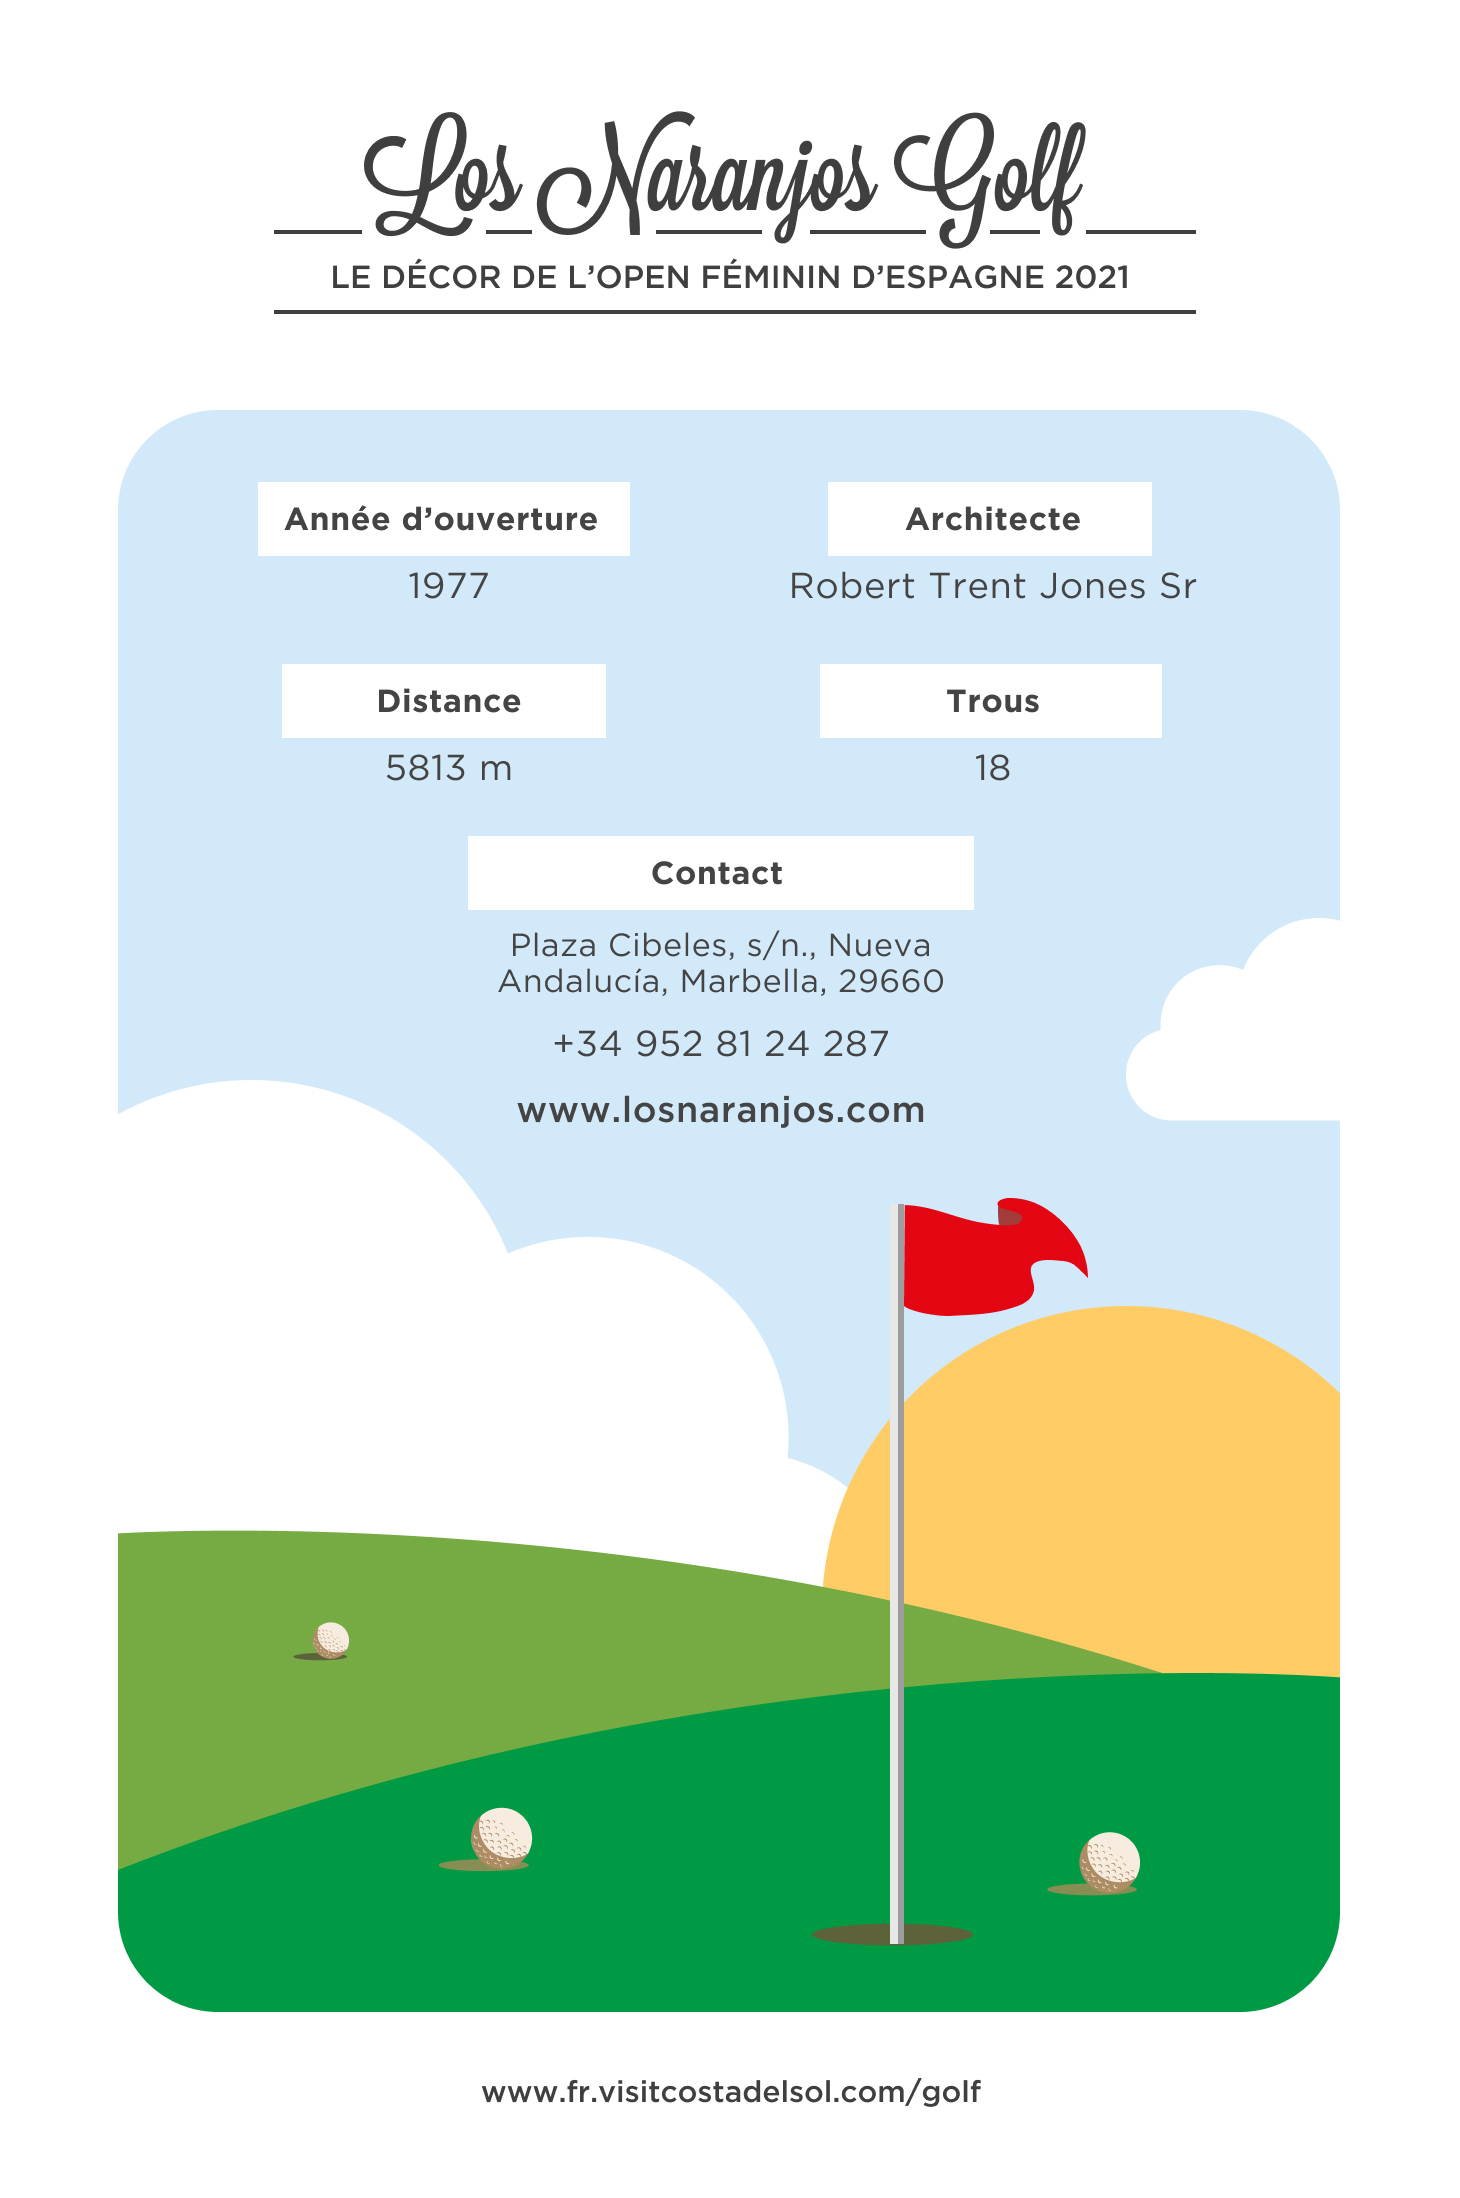 csol_#6_infografia_golf_naranjos-FR